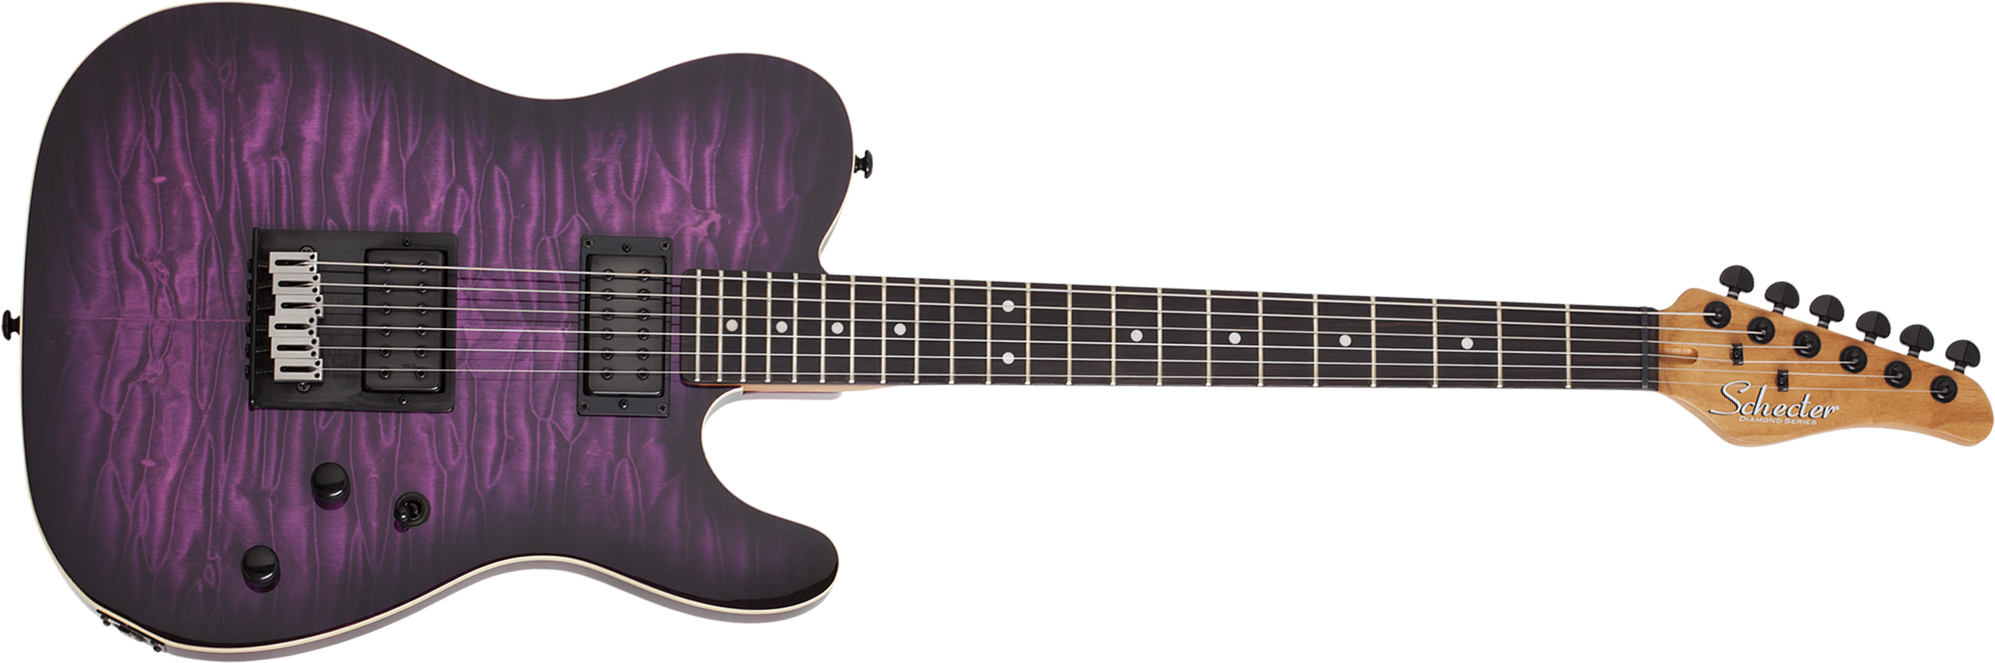 Schecter Pt Pro 2h Ht Eb - Trans Purple Burst - Televorm elektrische gitaar - Main picture